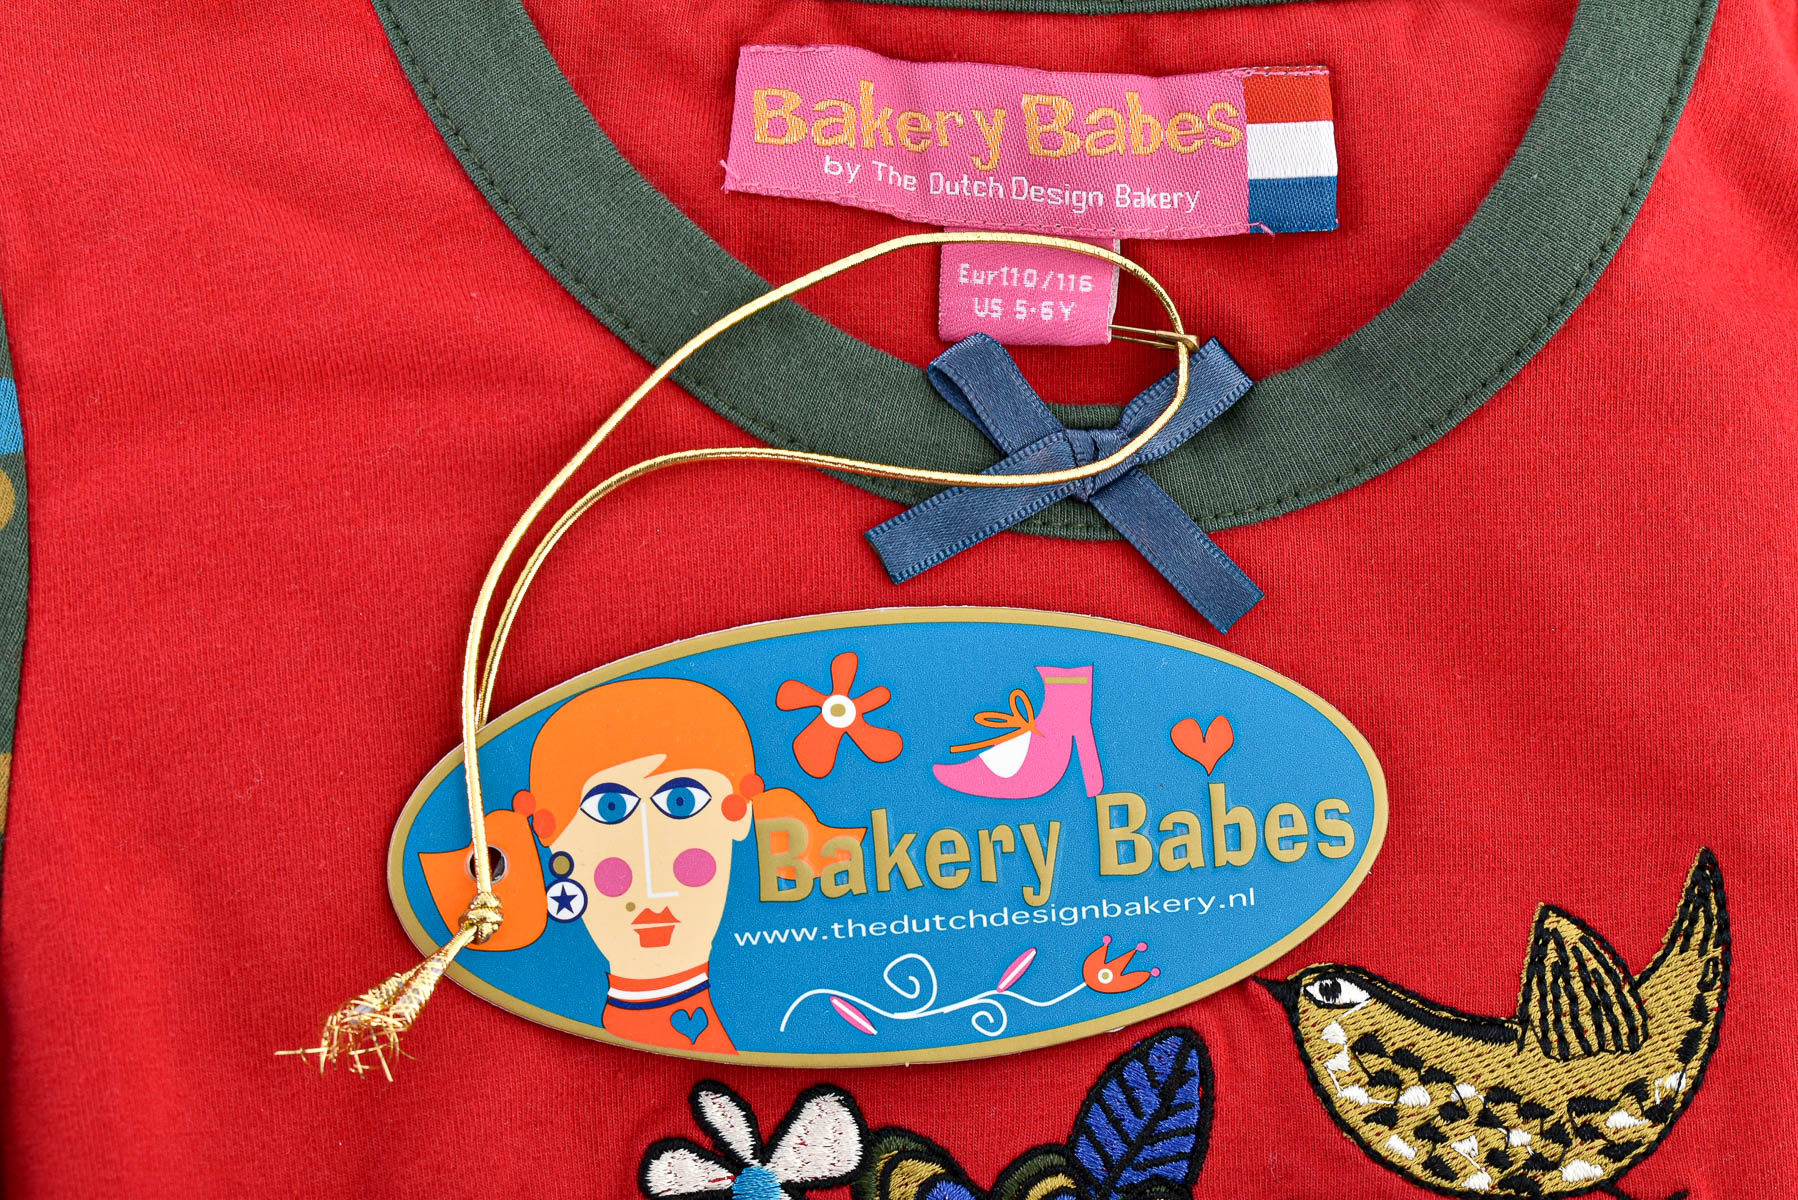 Rochia pentru copil - Bakery Babes by The Dutch Design Bakery - 2